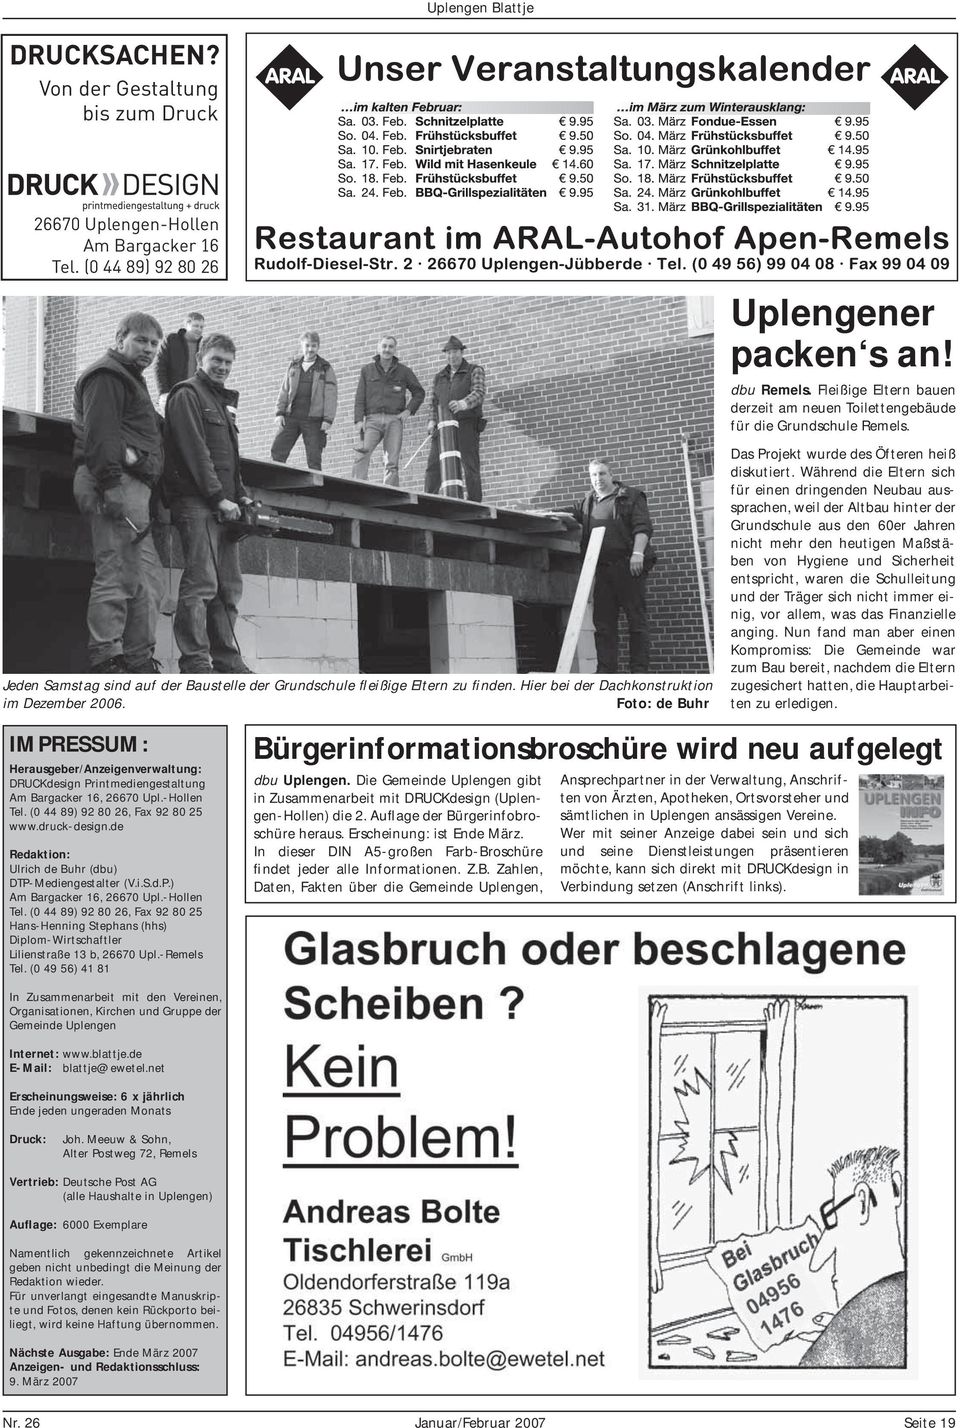 (0 44 89) 92 80 26, Fax 92 80 25 www.druck-design.de Redaktion: Ulrich de Buhr (dbu) DTP-Mediengestalter (V.i.S.d.P.) Am Bargacker 16, 26670 Upl.-Hollen Tel.